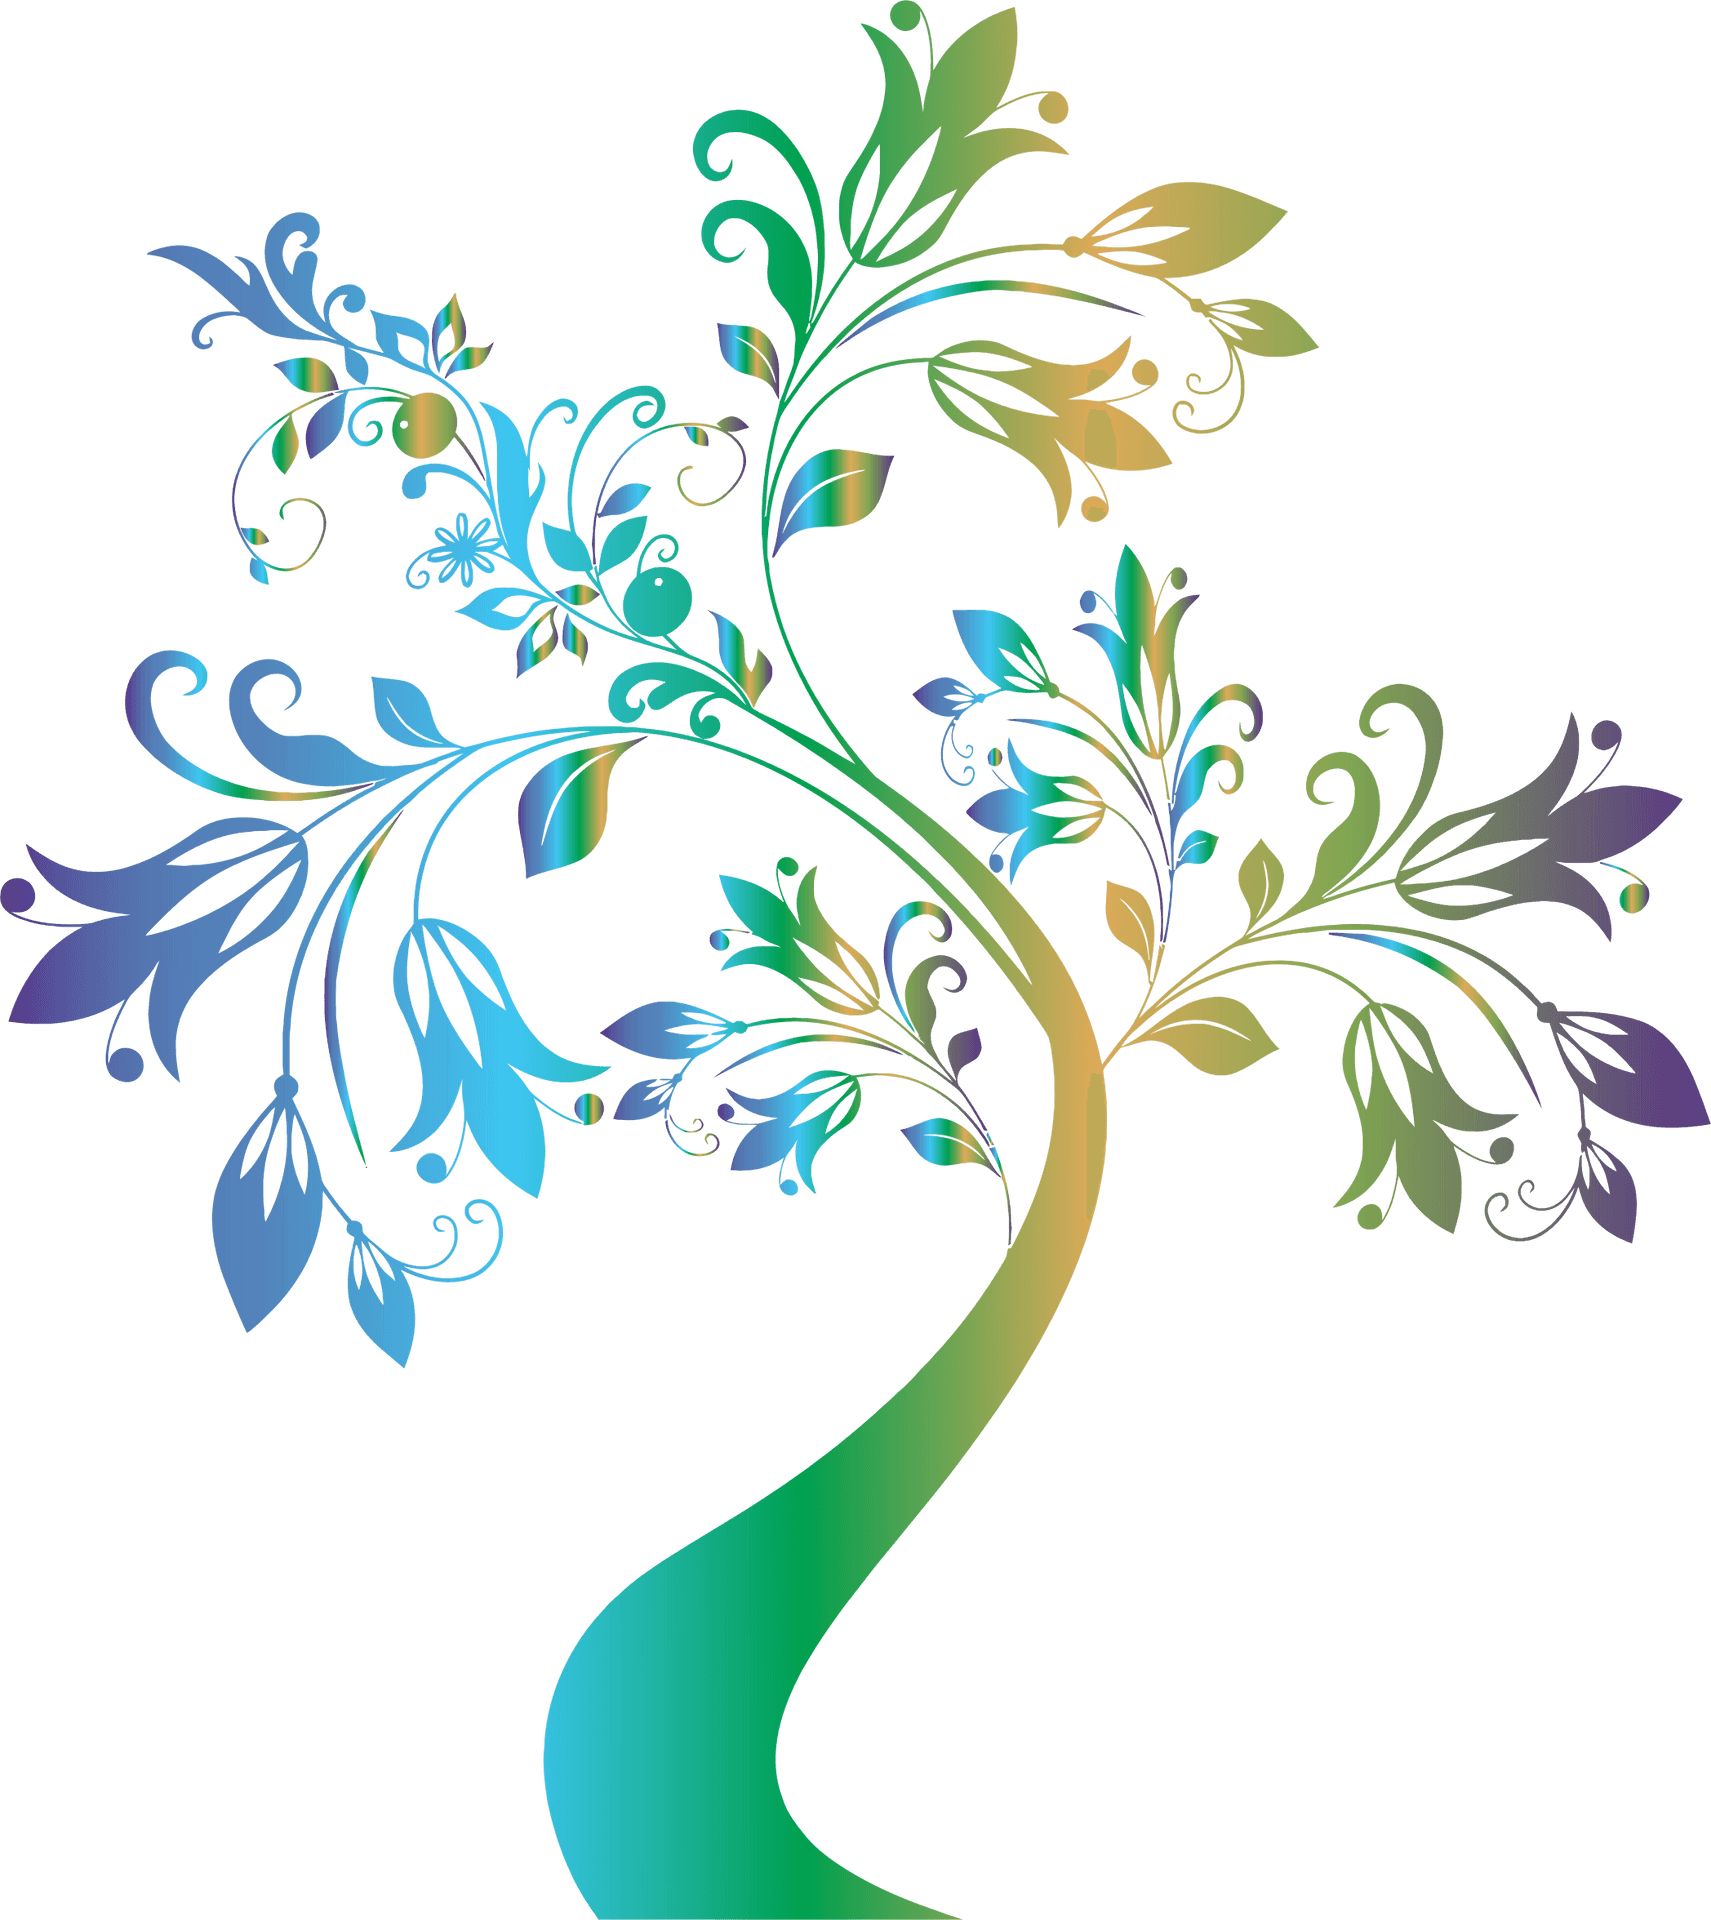 Abstract Floral Design Artwork PNG image